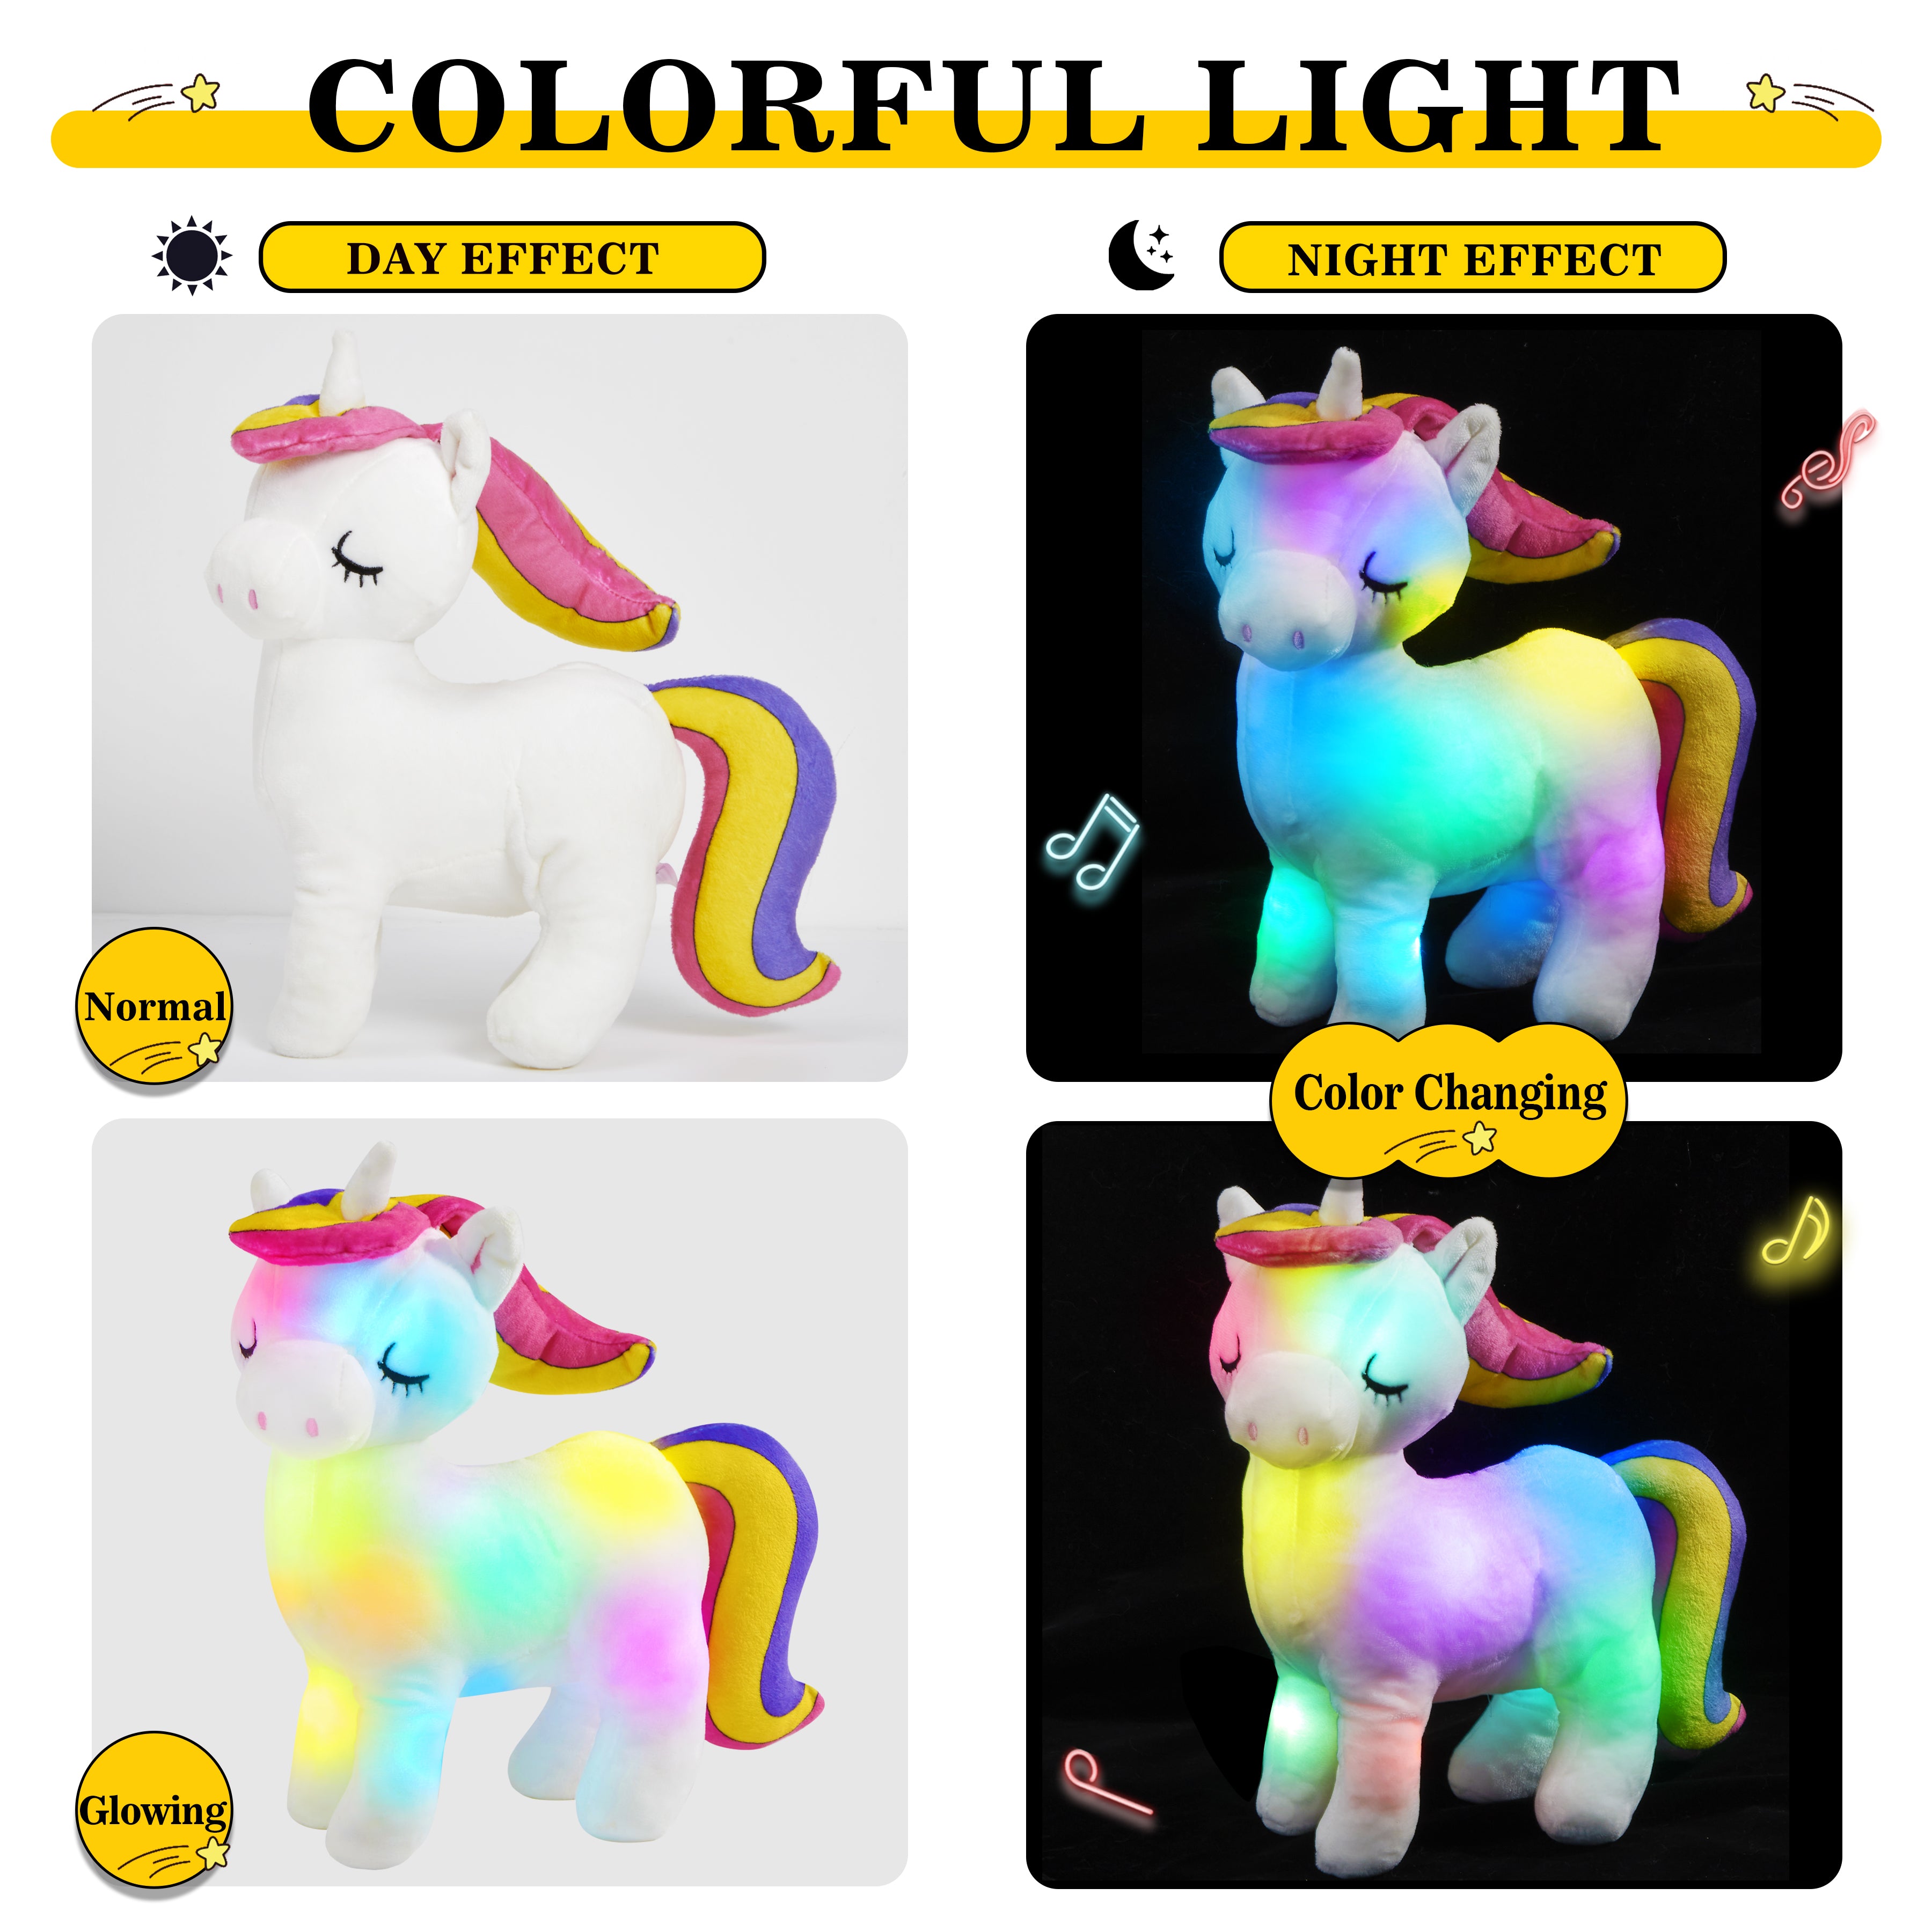 Bstaofy Light up Rainbow Unicorn Stuffed Animals LED Colorful - Glow Guards